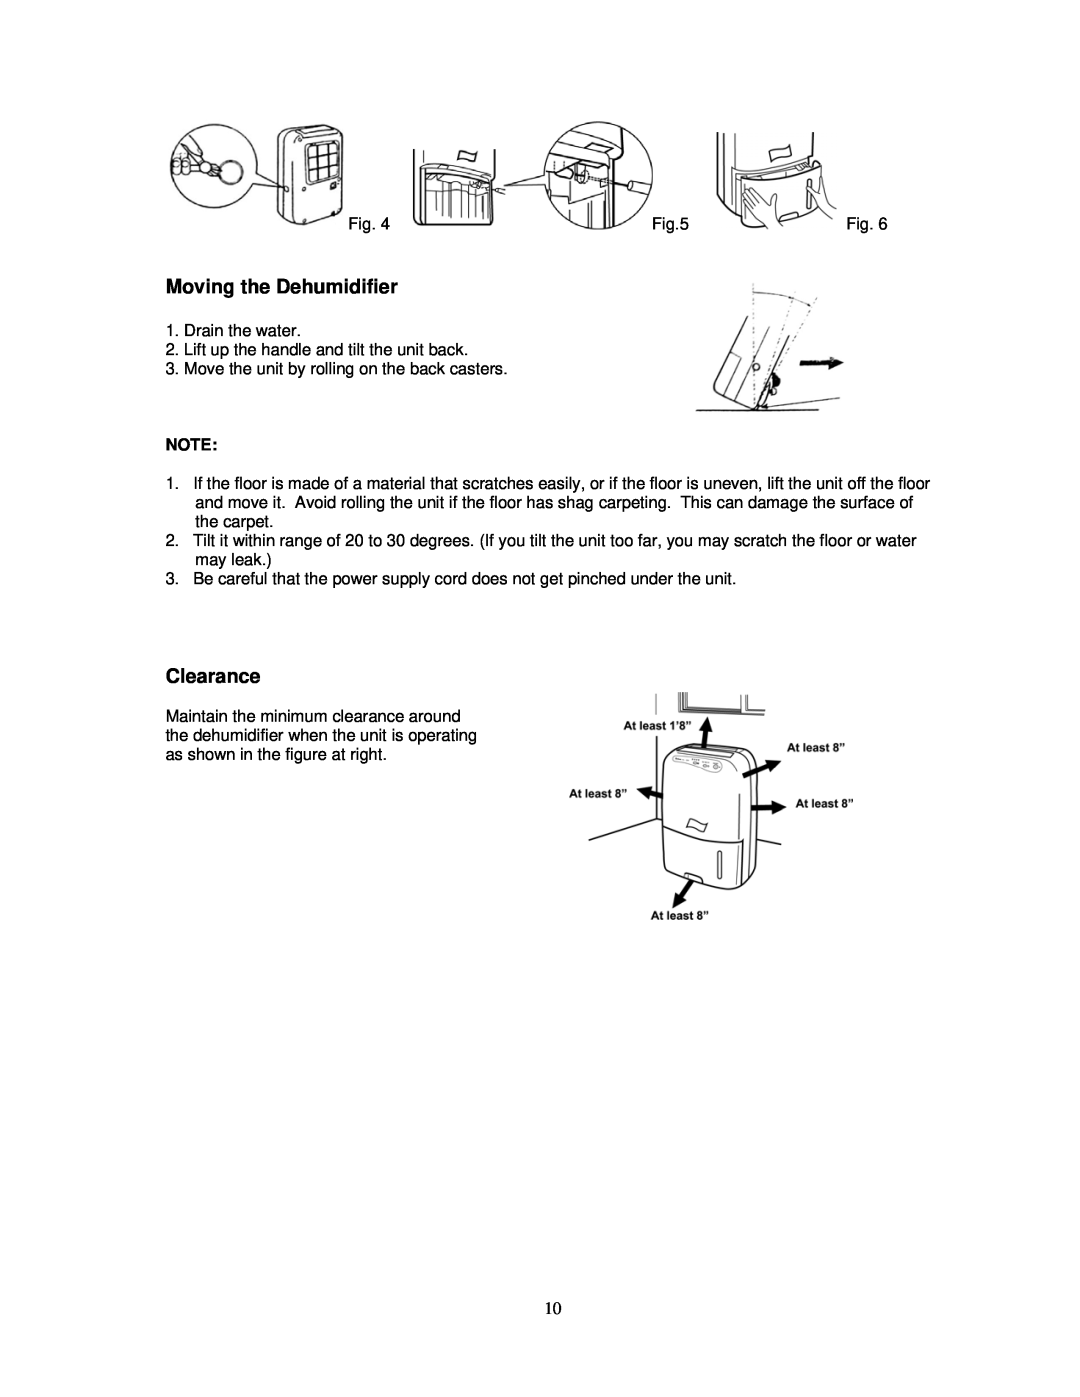 Soleus Air PORTABLE DEHUMIDIFIER user manual Moving the Dehumidifier, Clearance 